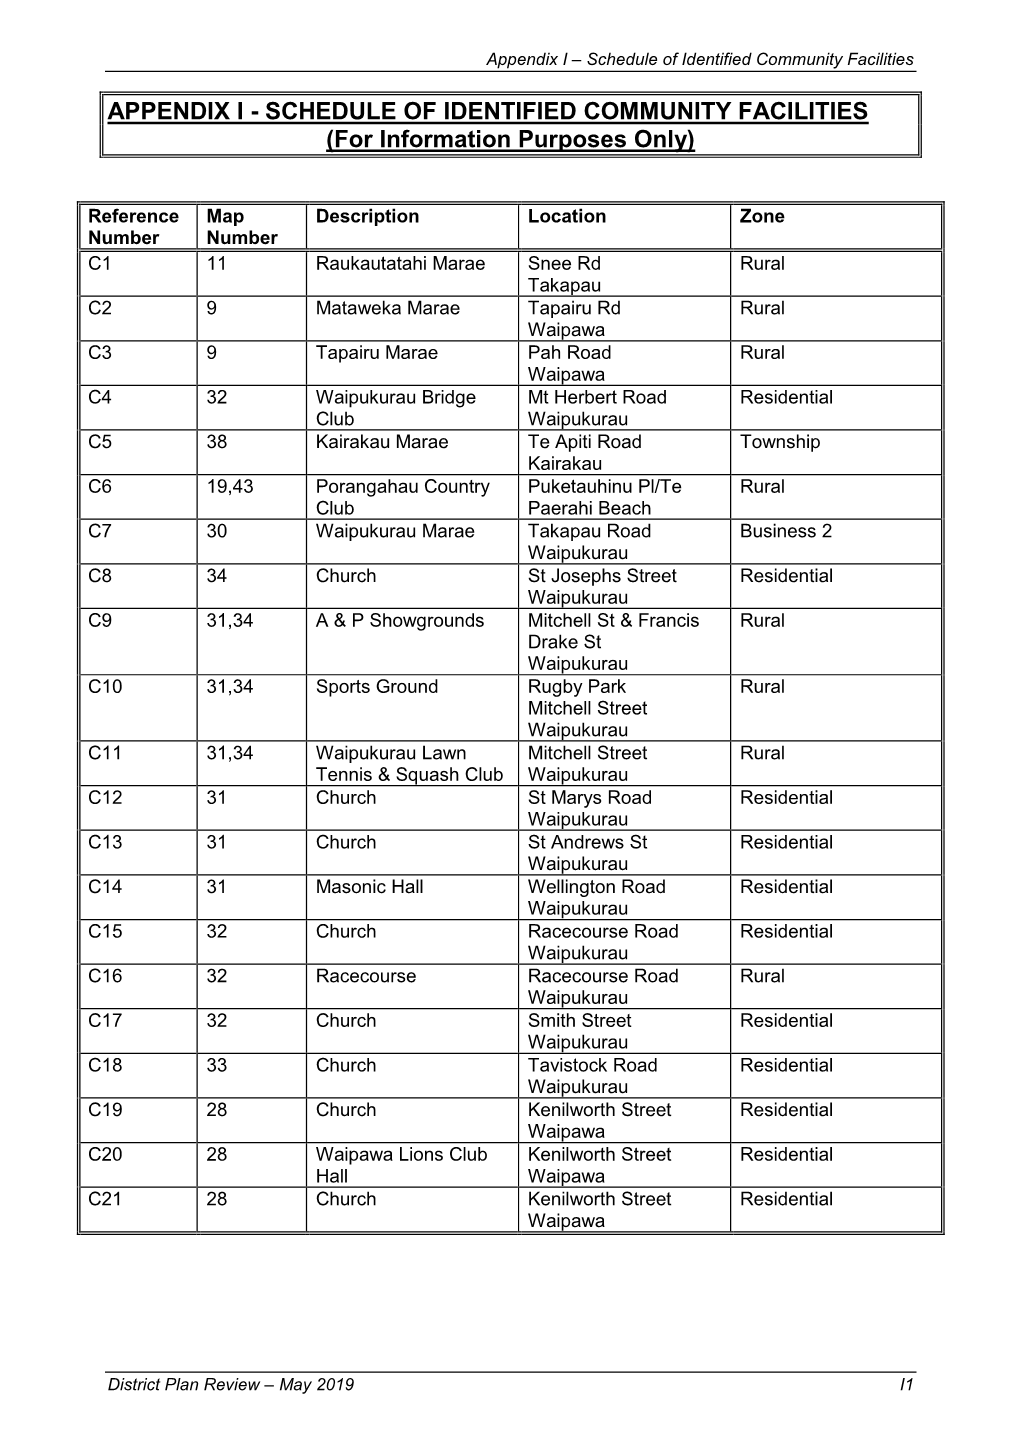 Schedule of Identified Community Facilities